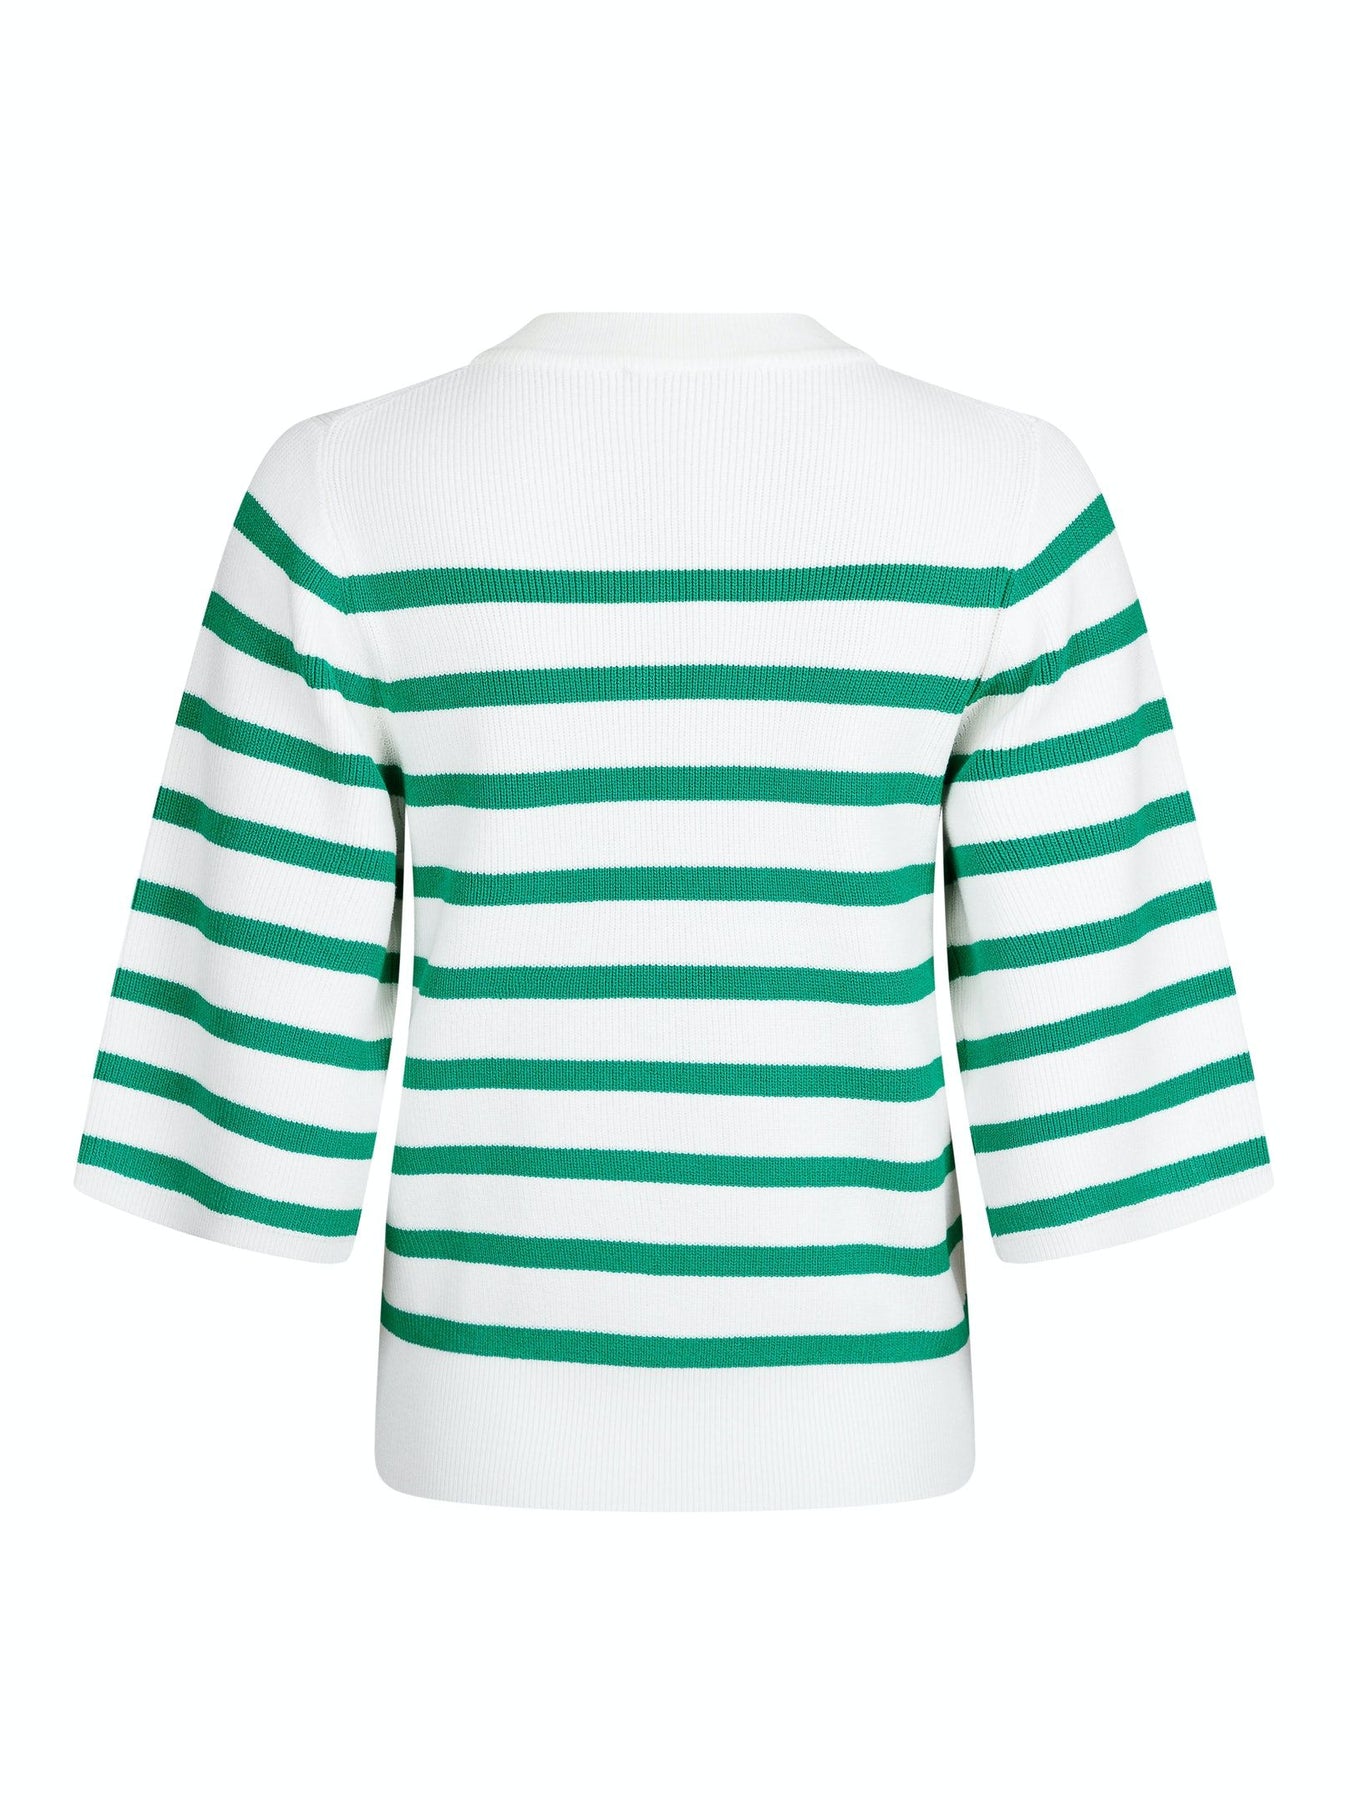 Minka Stripe Knit Blouse - Green